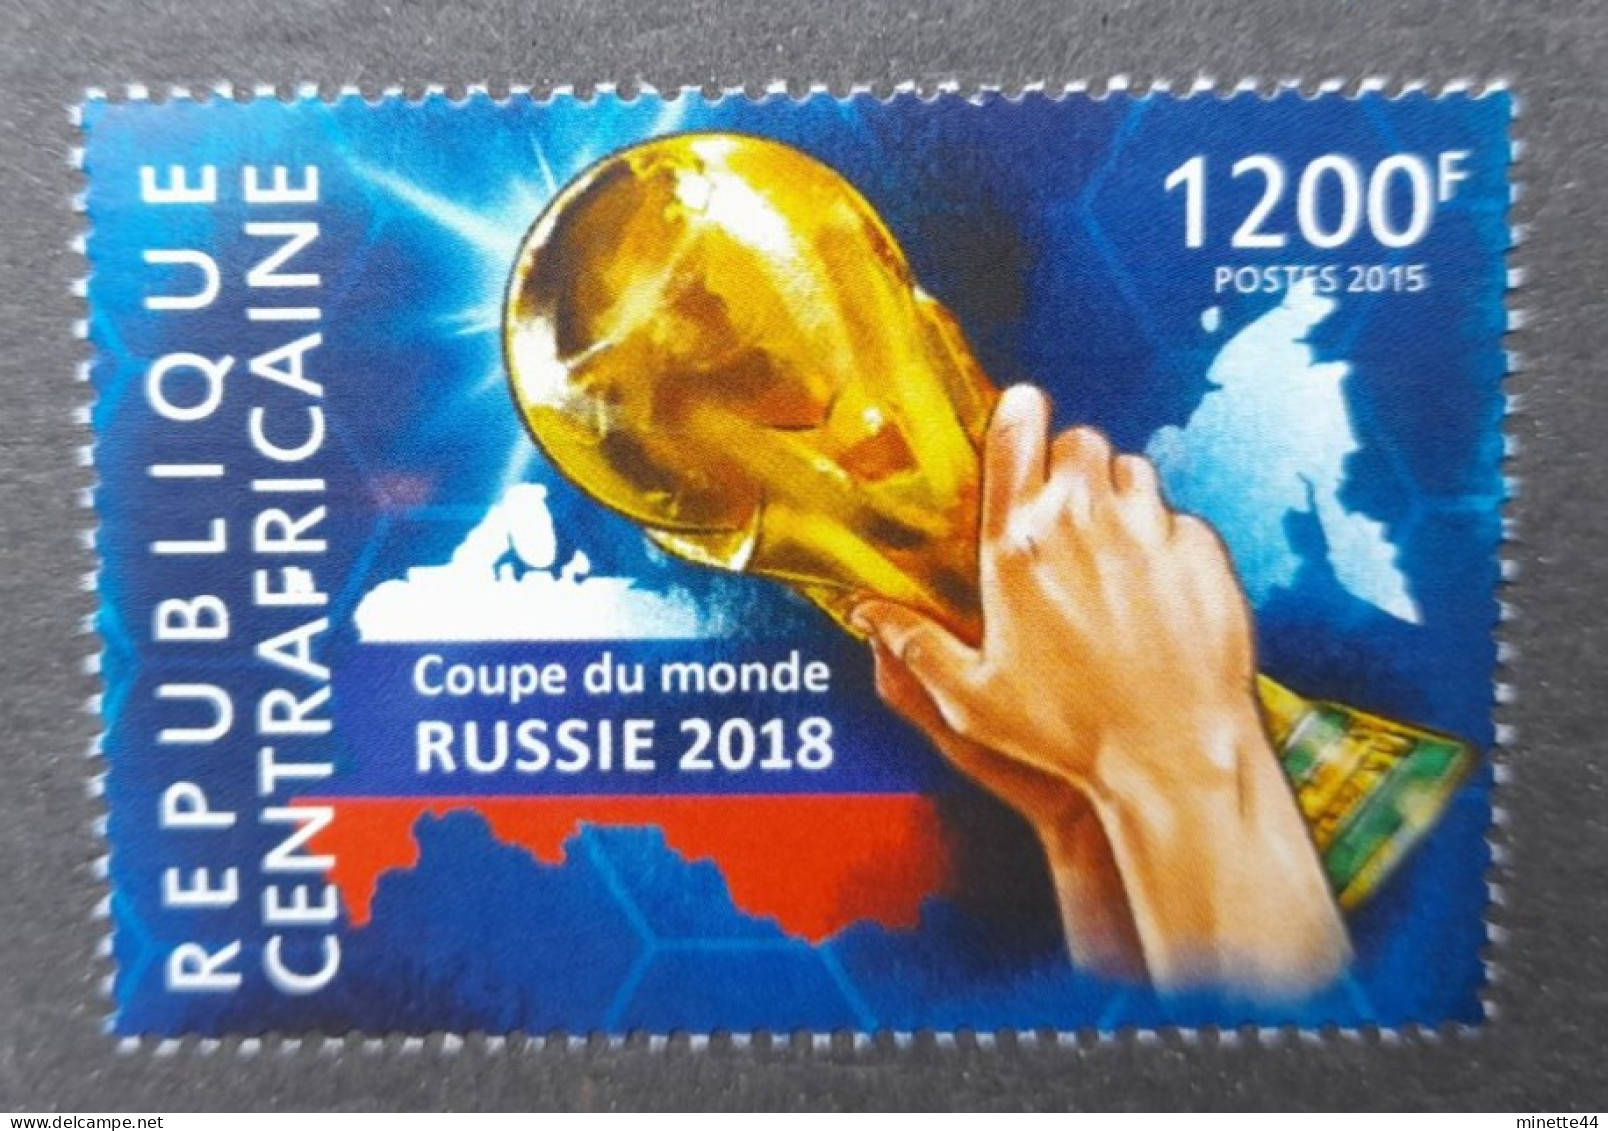 RUSSIE RUSSIA 2018 MNH** SCARCE CENTRAFRIQUE CENTRAFRICAINE FOOTBALL FUSSBALL SOCCER CALCIO FOOT FUTBOL FUTEBOL VOETBAL - 2018 – Rusia